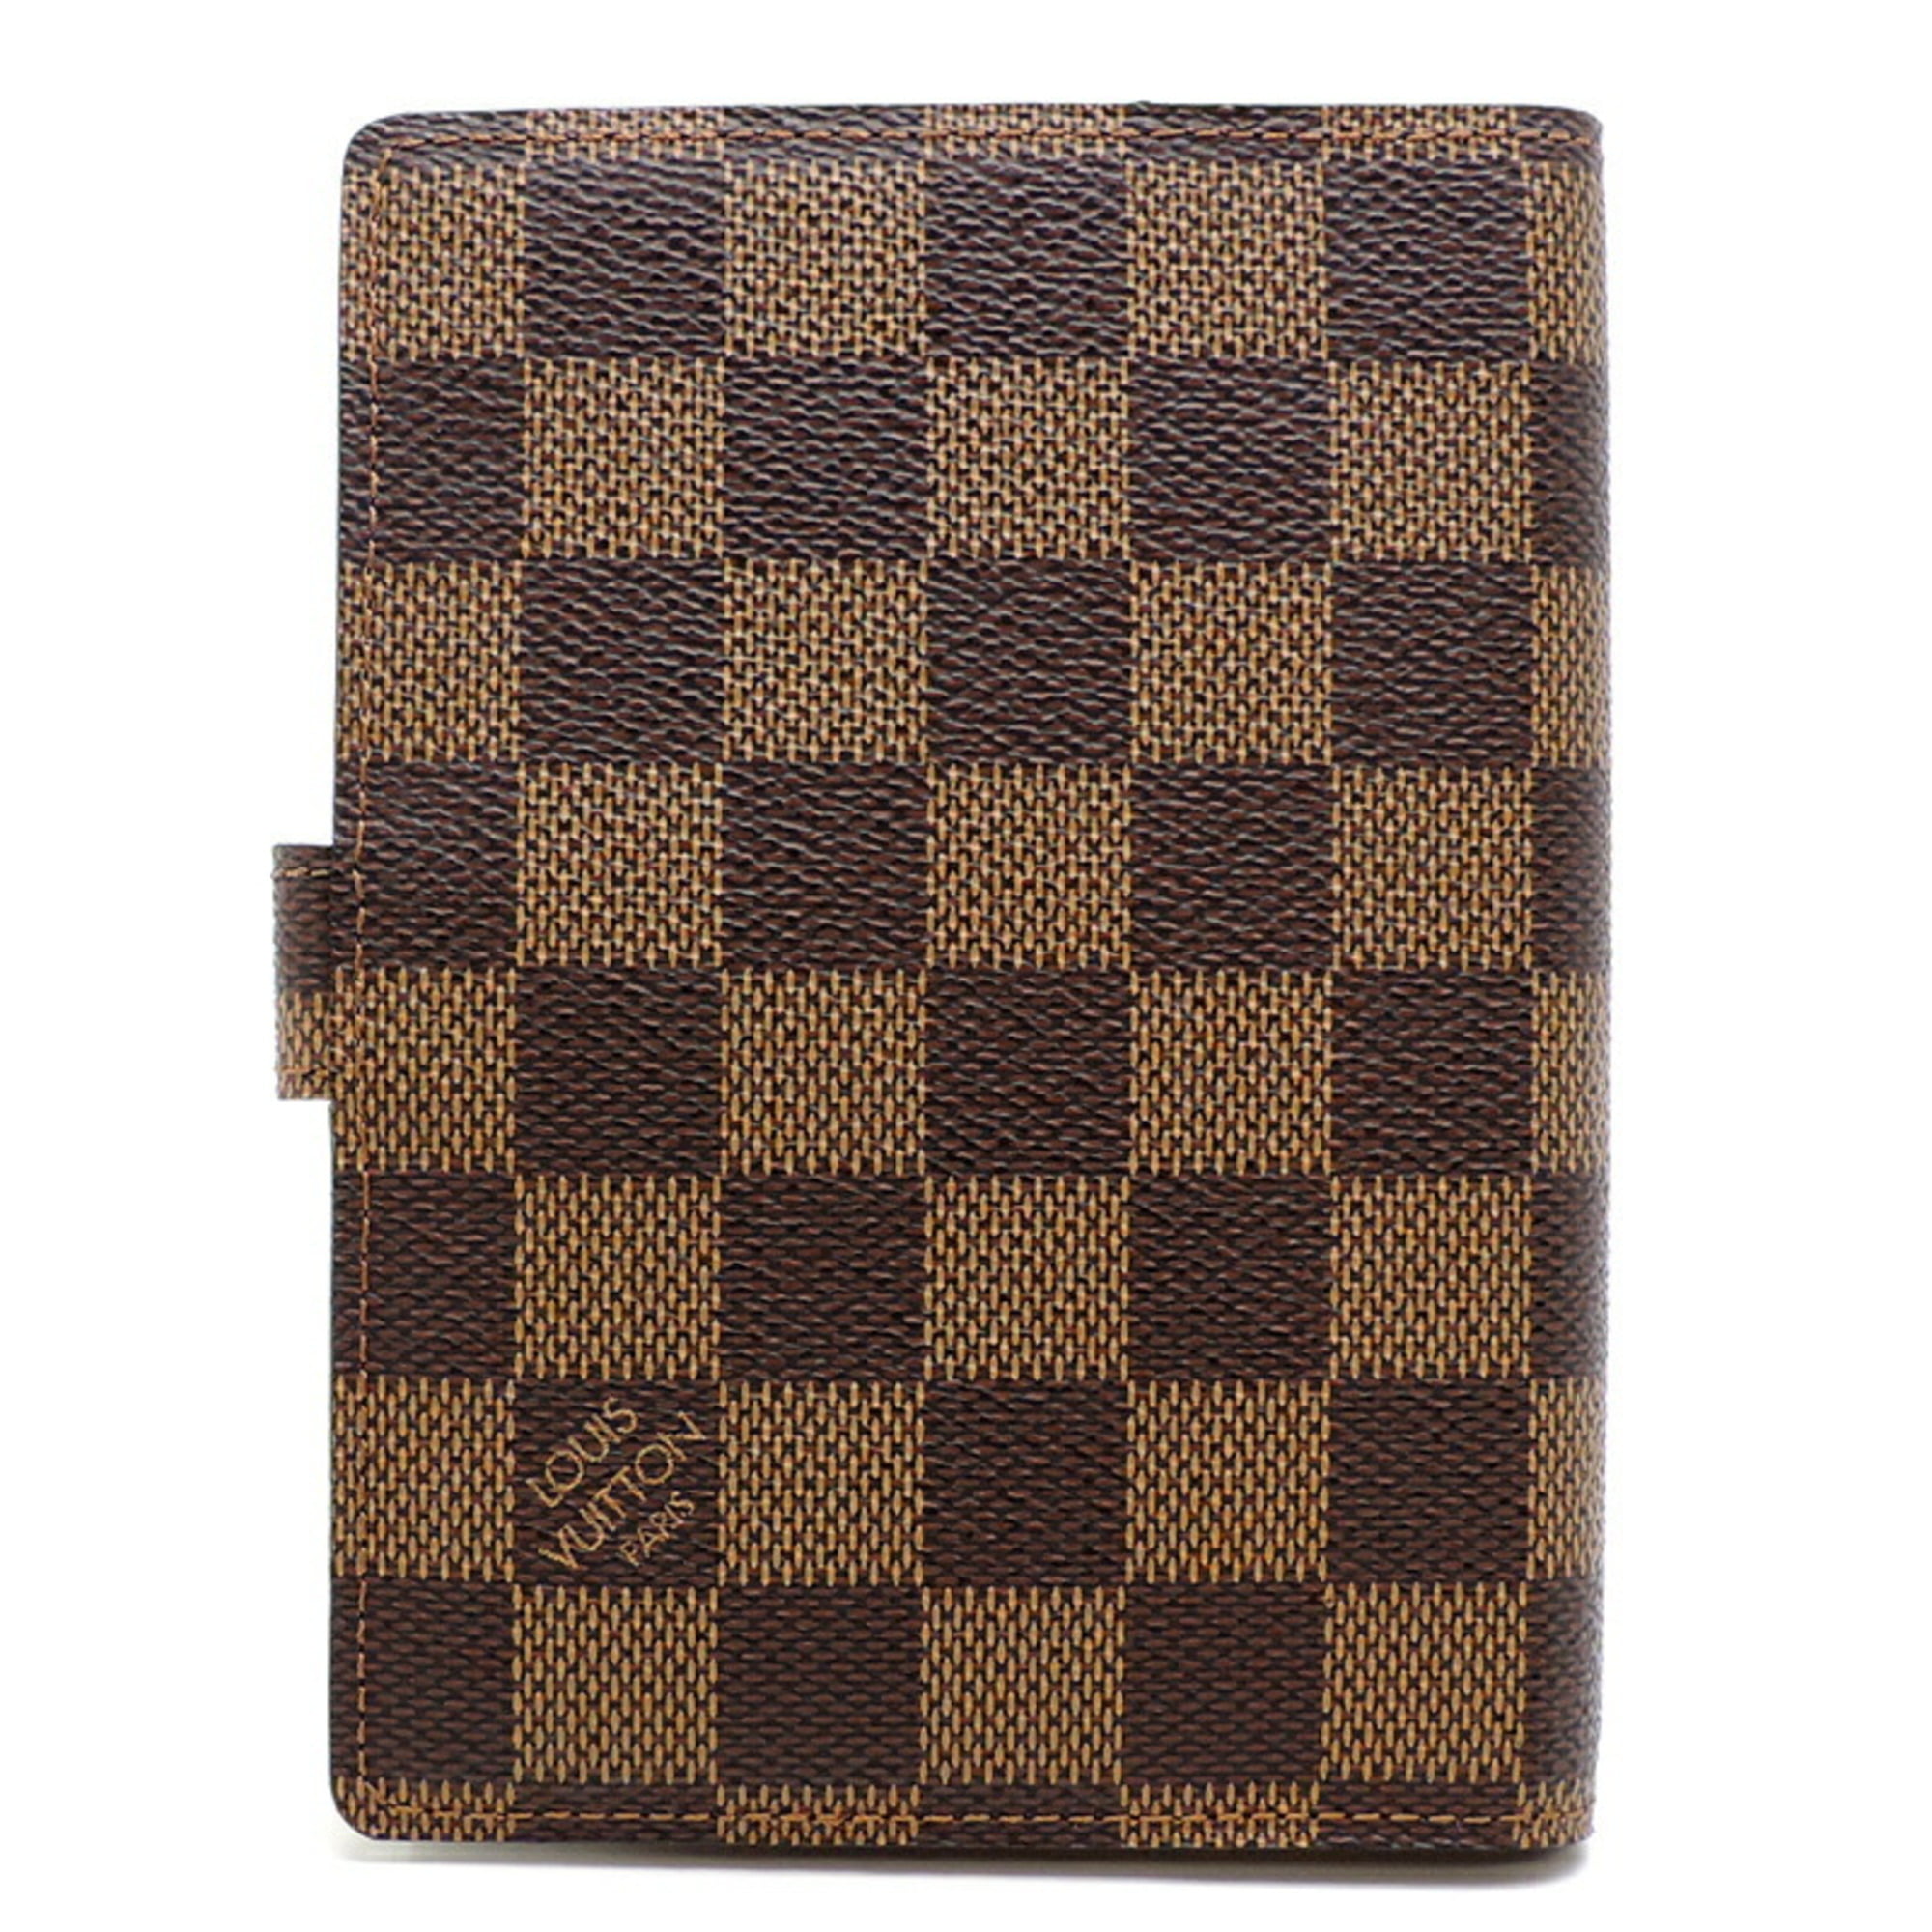 Louis Vuitton Notebook Cover Damier Ebene Agenda PM Brown R20700